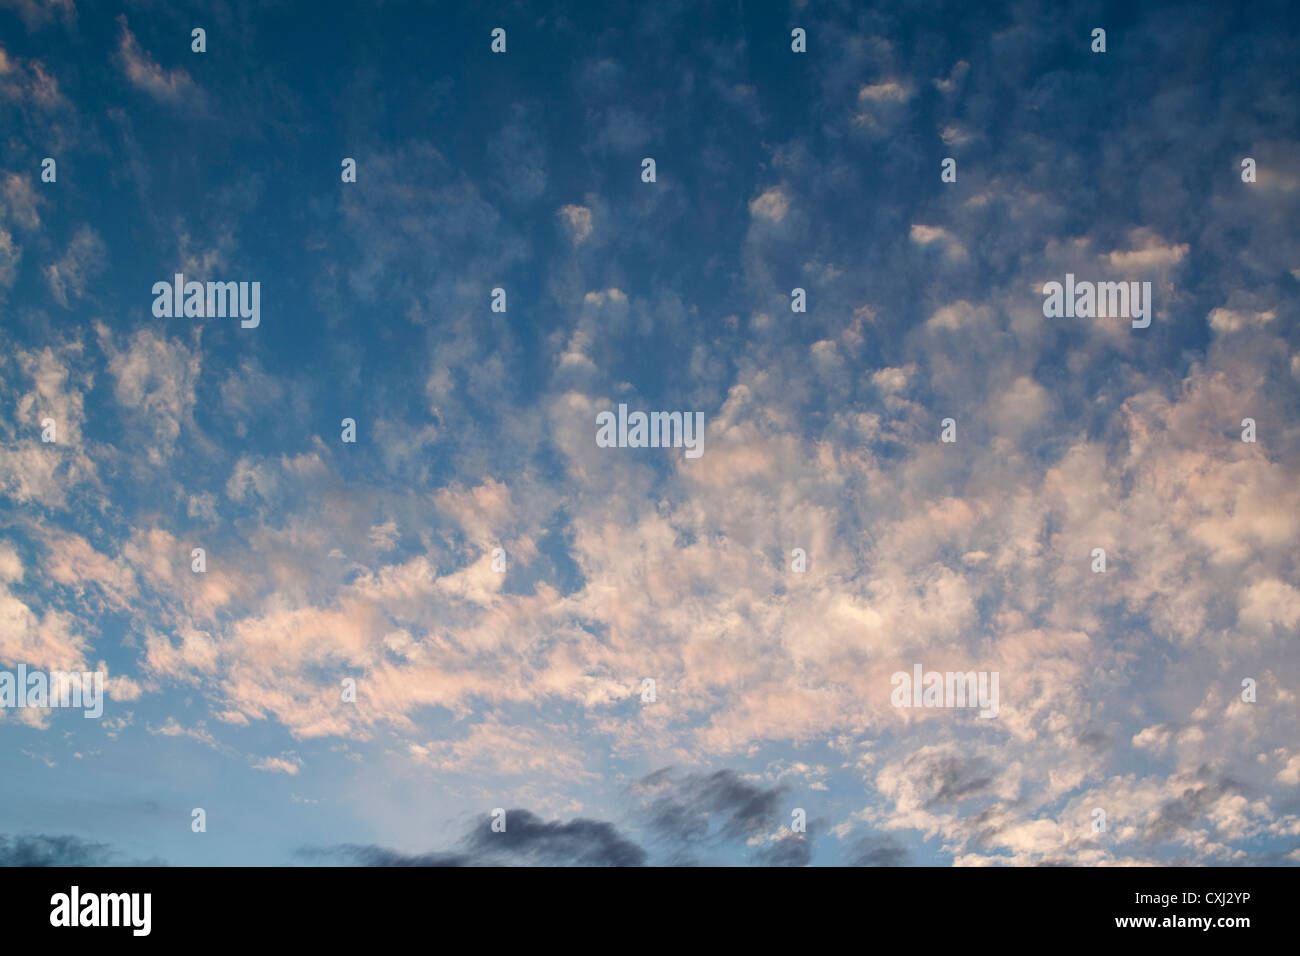 Altocumulus clouds, the so-called mackerel sky, near sunset Stock Photo